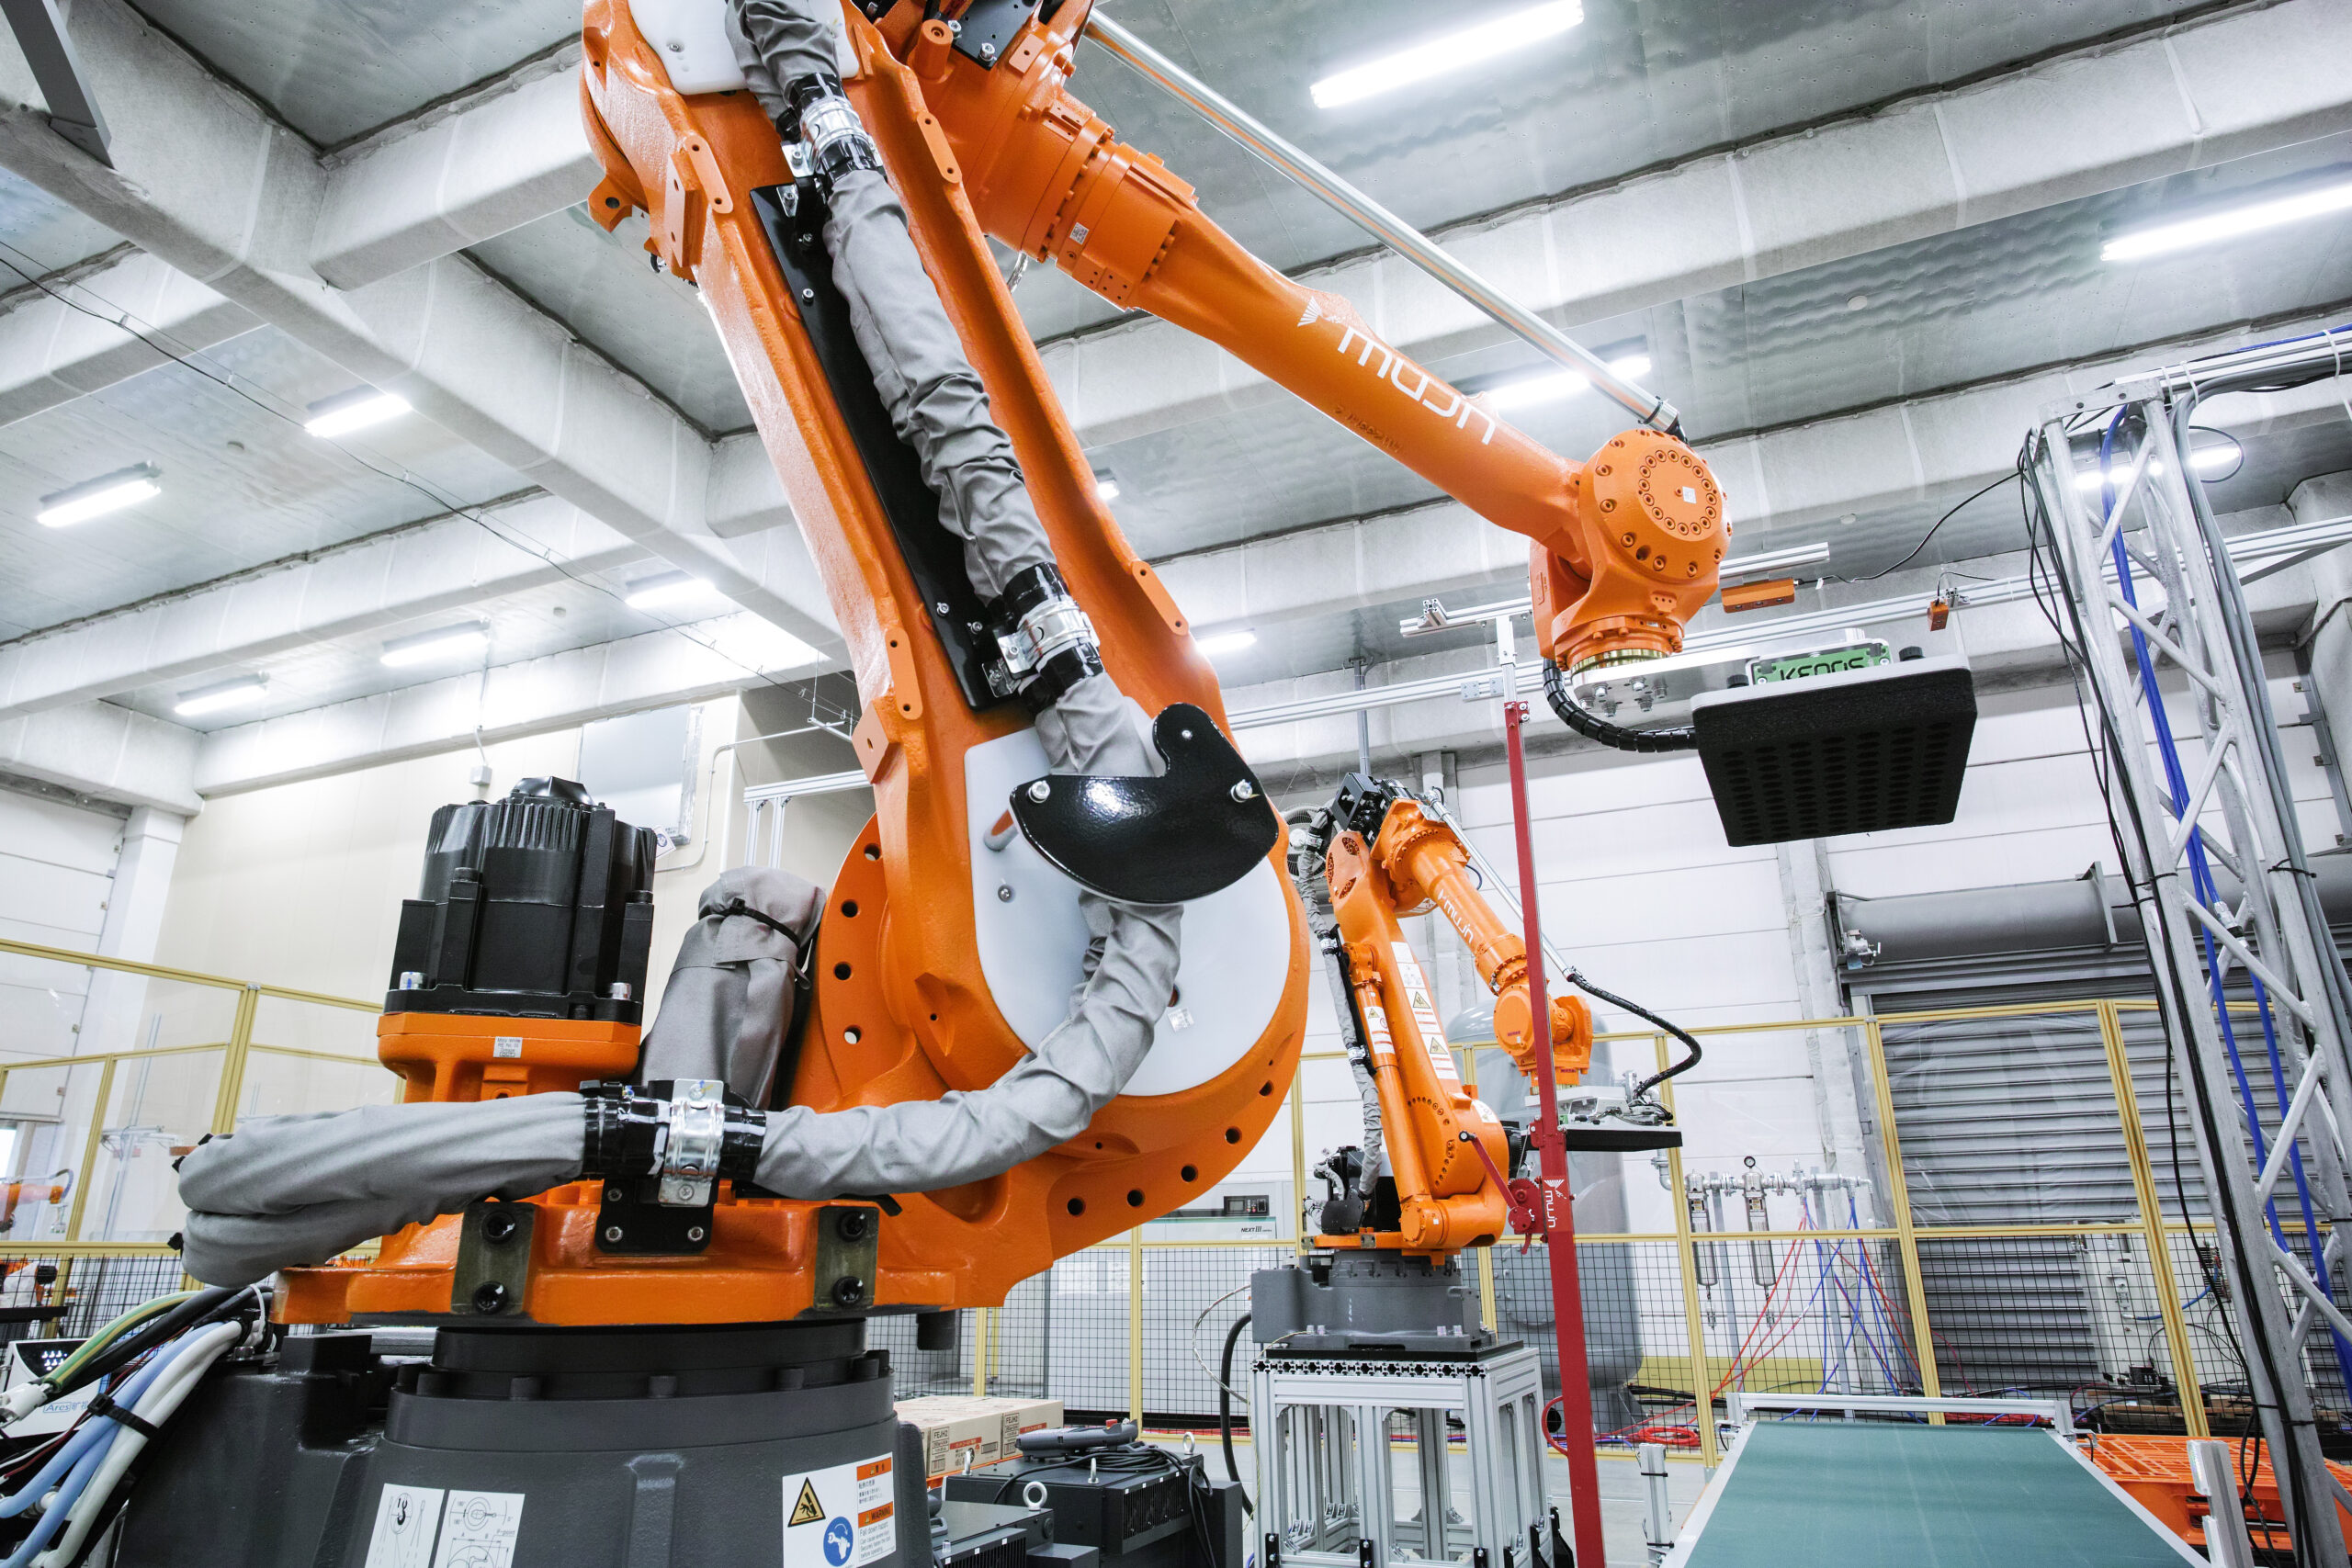 Underneath view of an orange Mujin palletizing robot